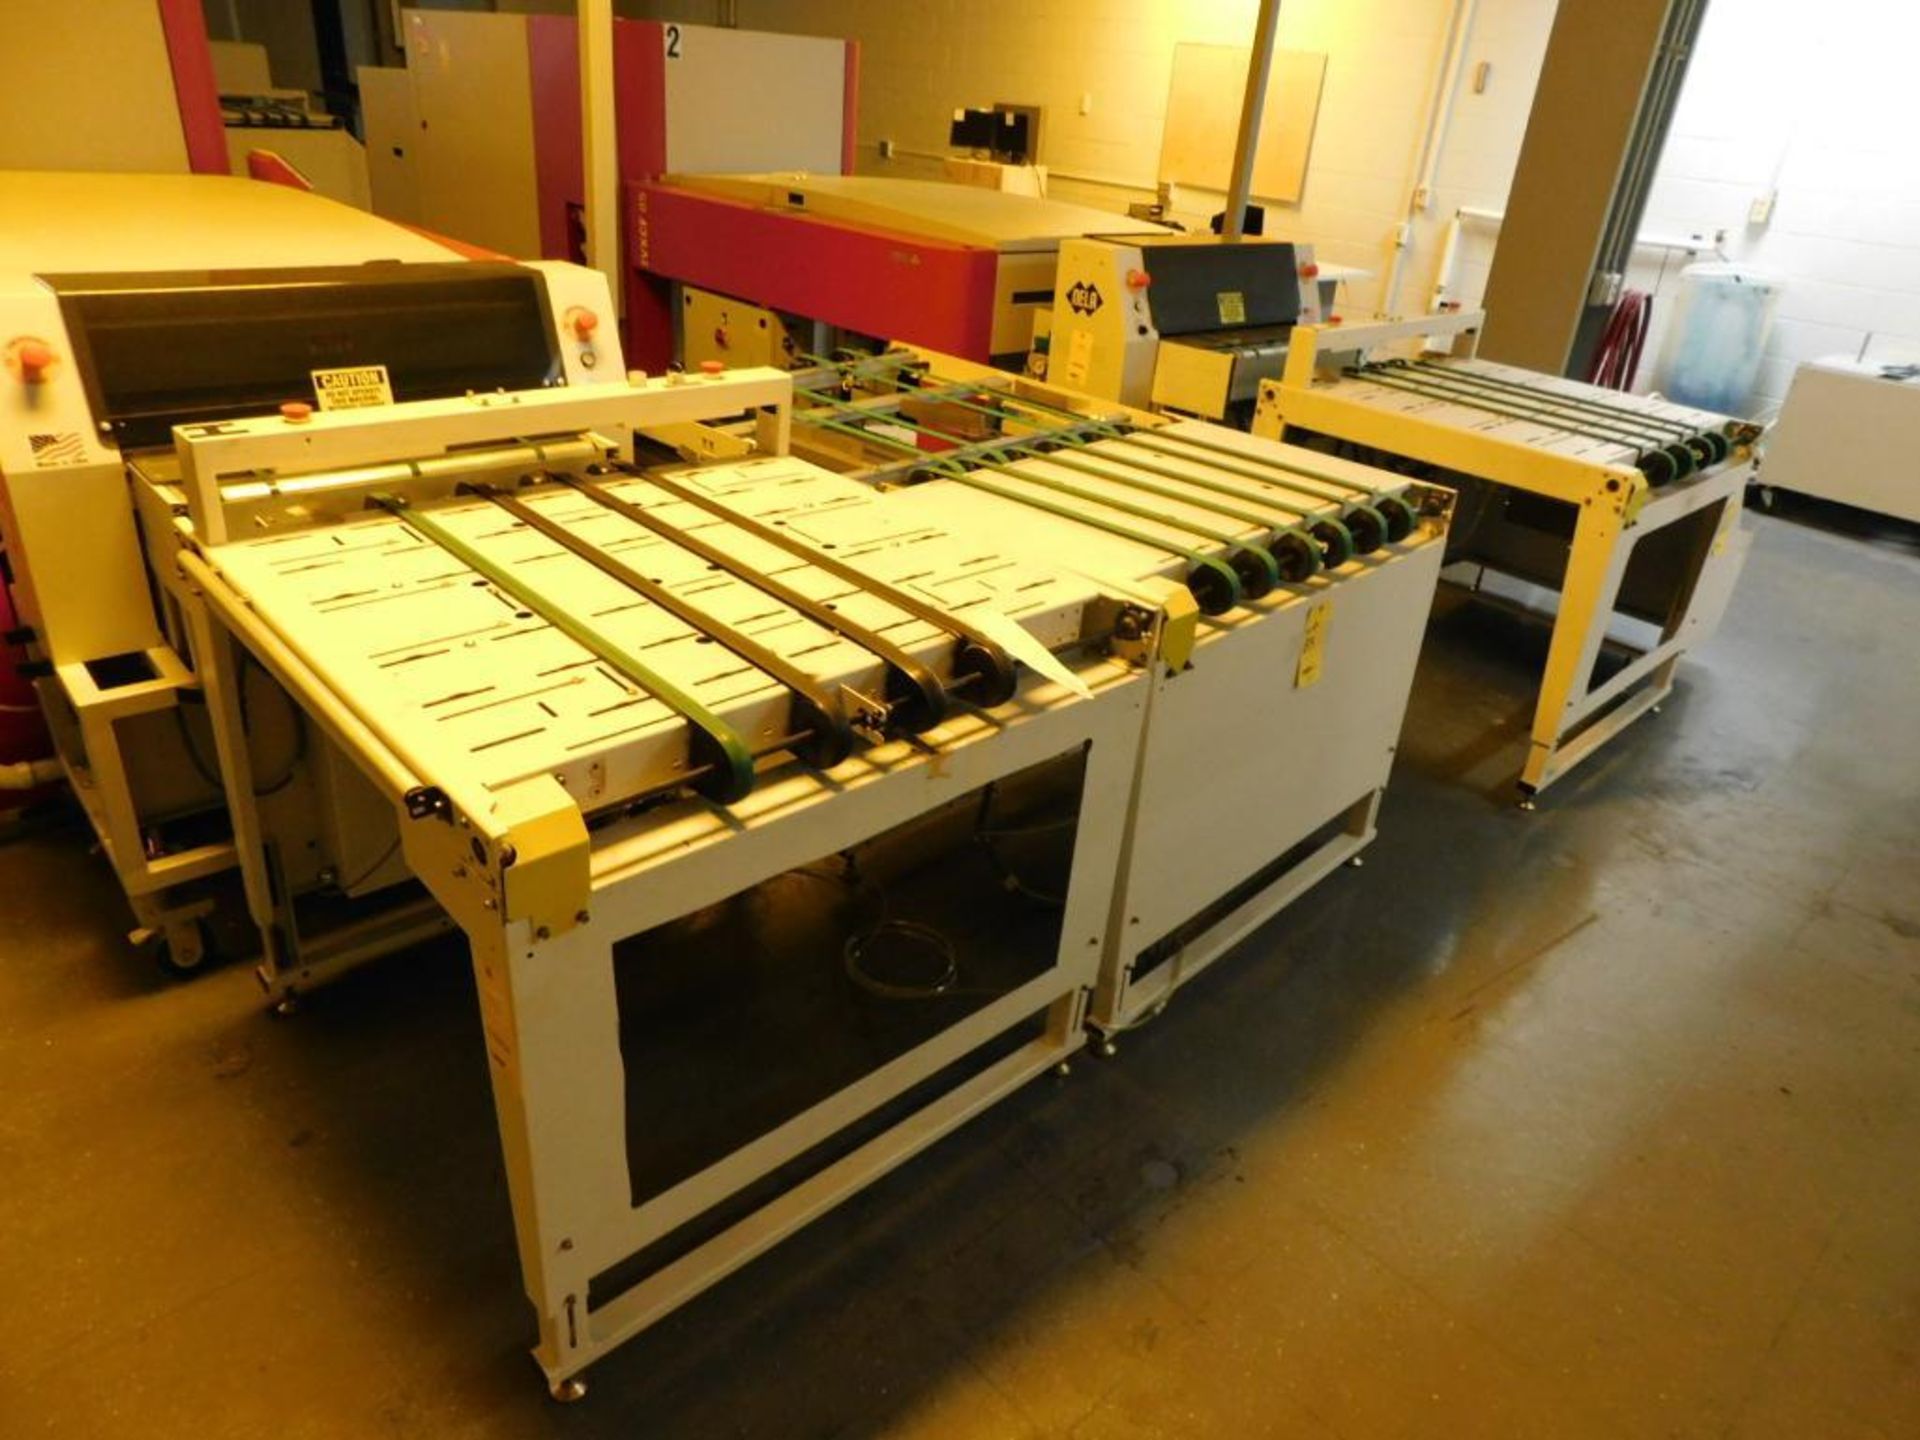 LOT: (1) K & F Model CDH GR-086 Conveyor Table, S/N 0505, (1) K & F UTM GR-131 Conveyor Table, S/N 0